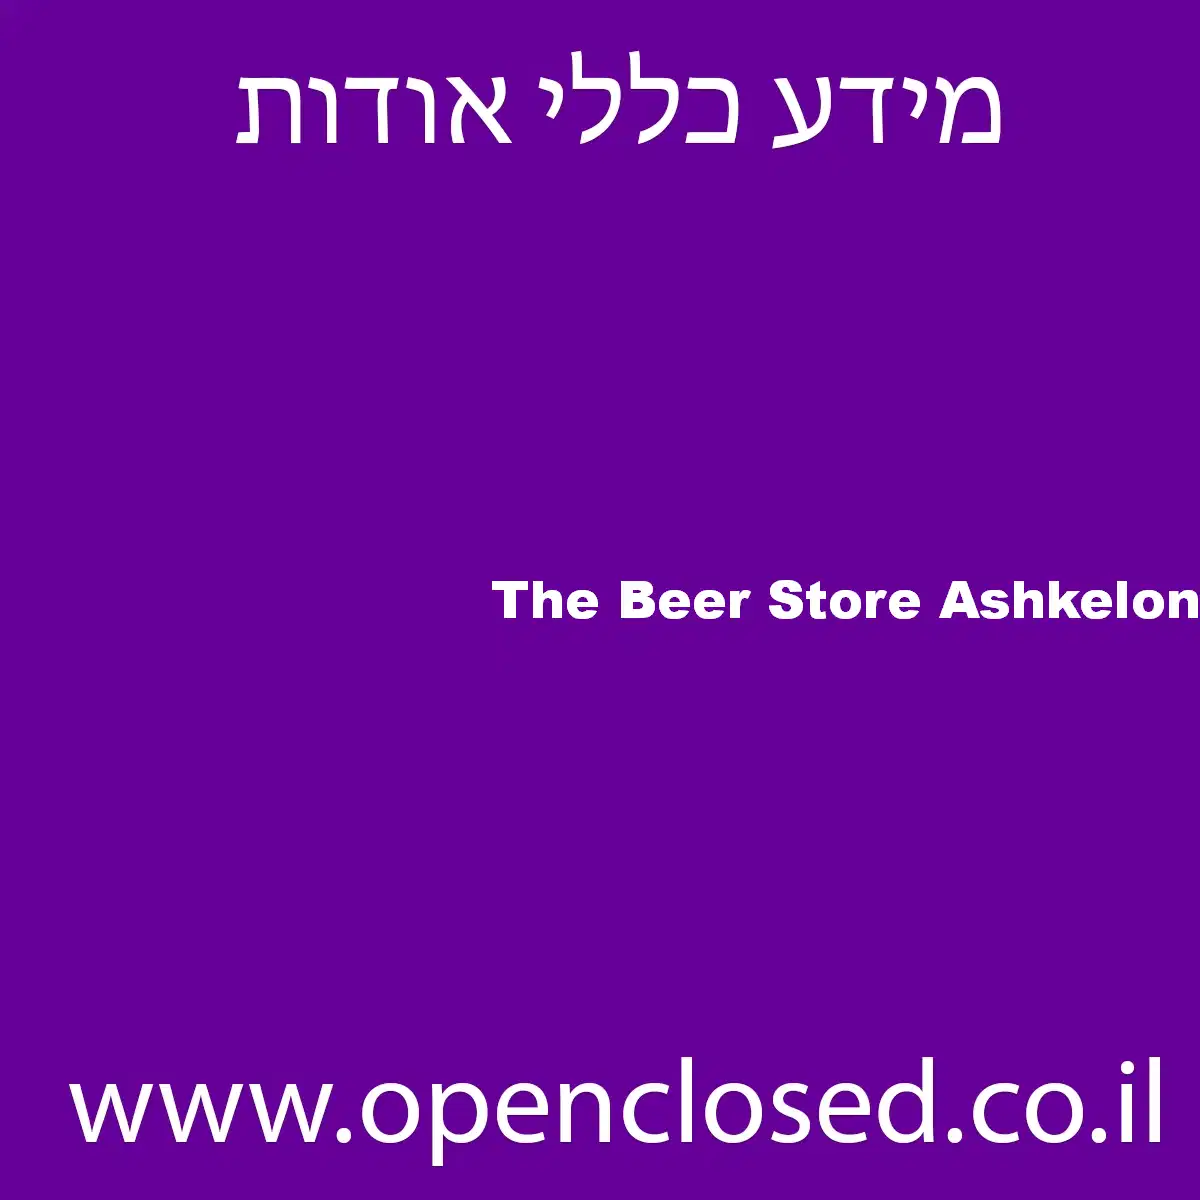 The Beer Store Ashkelon